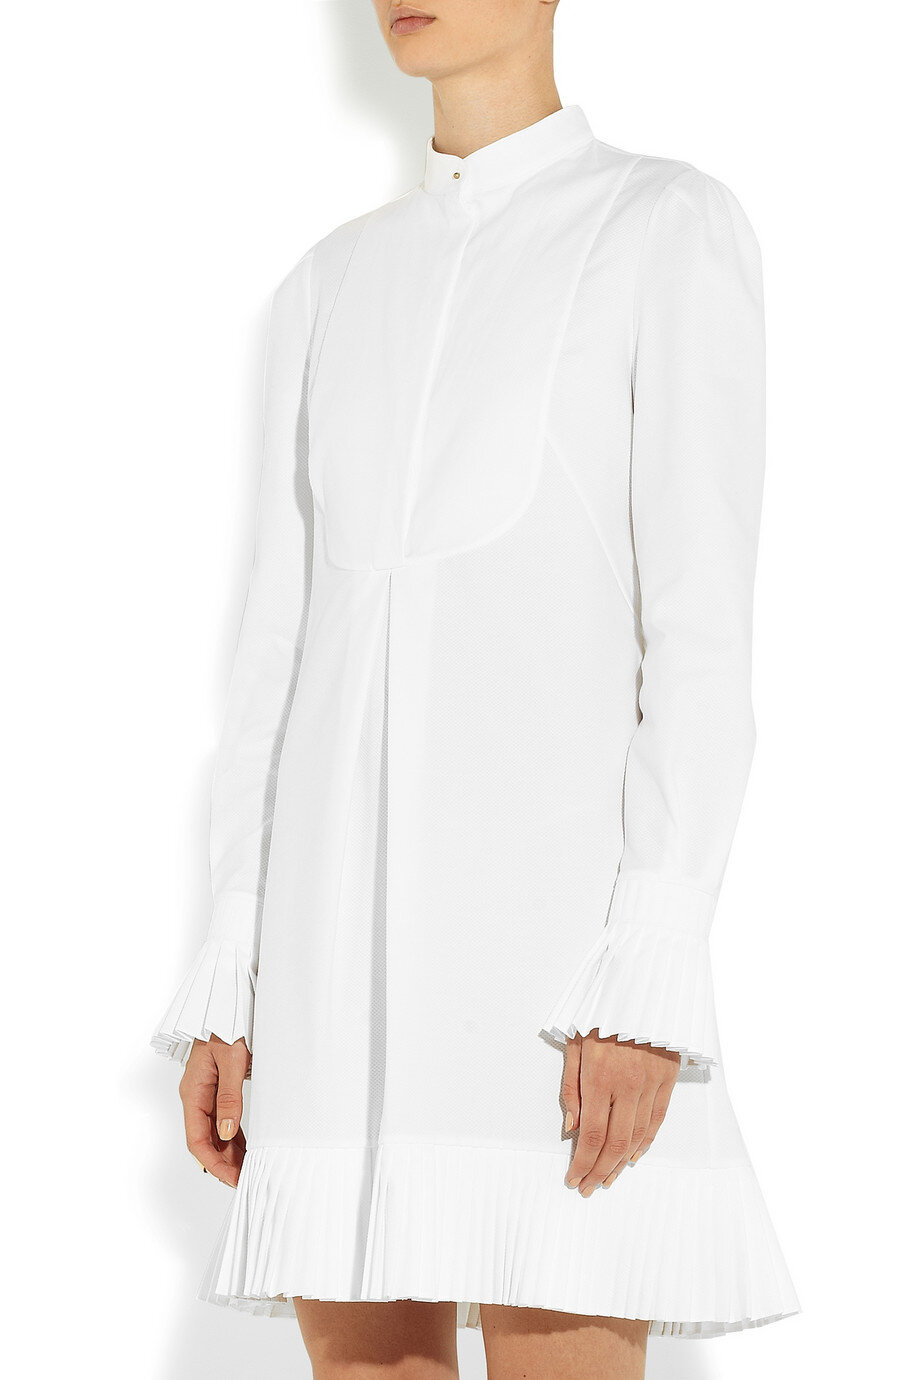 alexander-mcqueen-off-white-pleated-cottonpique-shirt-dress-product-2-11753265-790551402.jpg